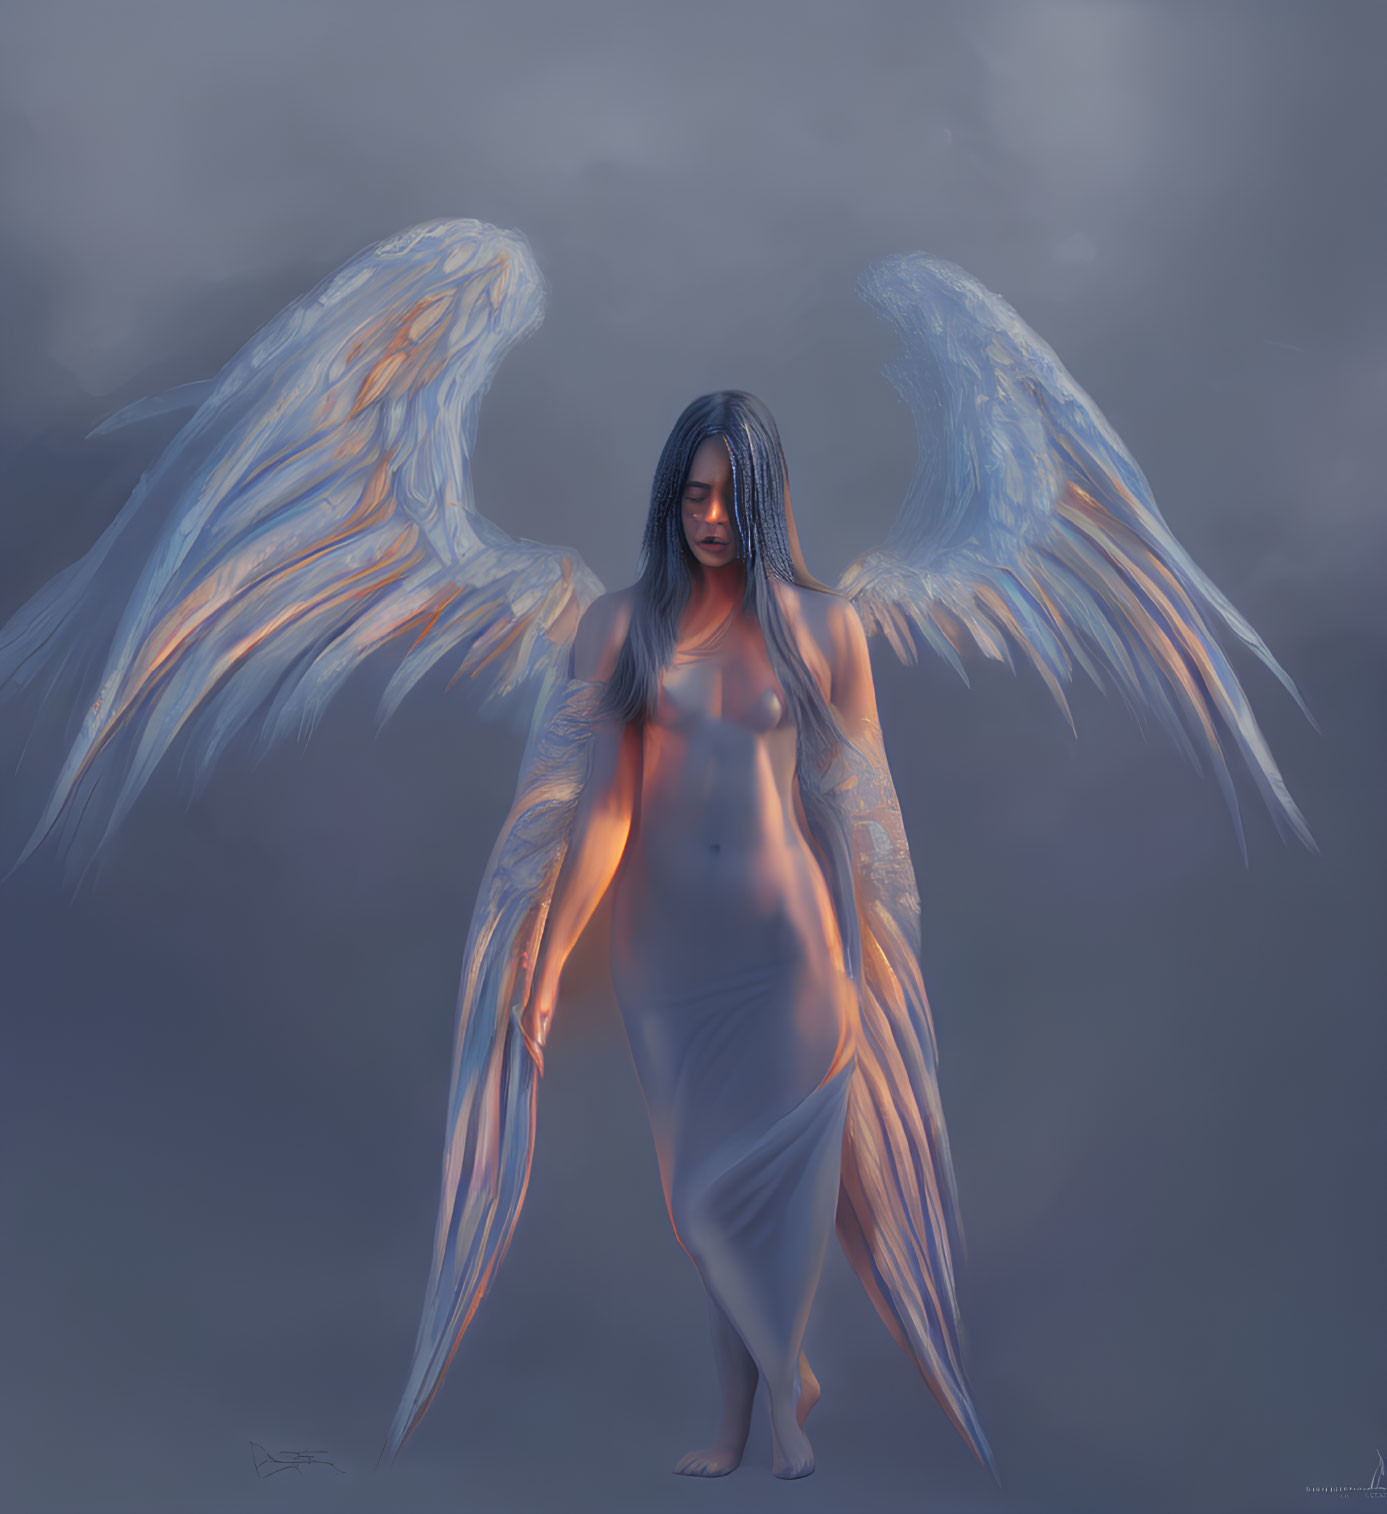 Digital artwork: solemn angelic figure with blue wings in cloudy sky